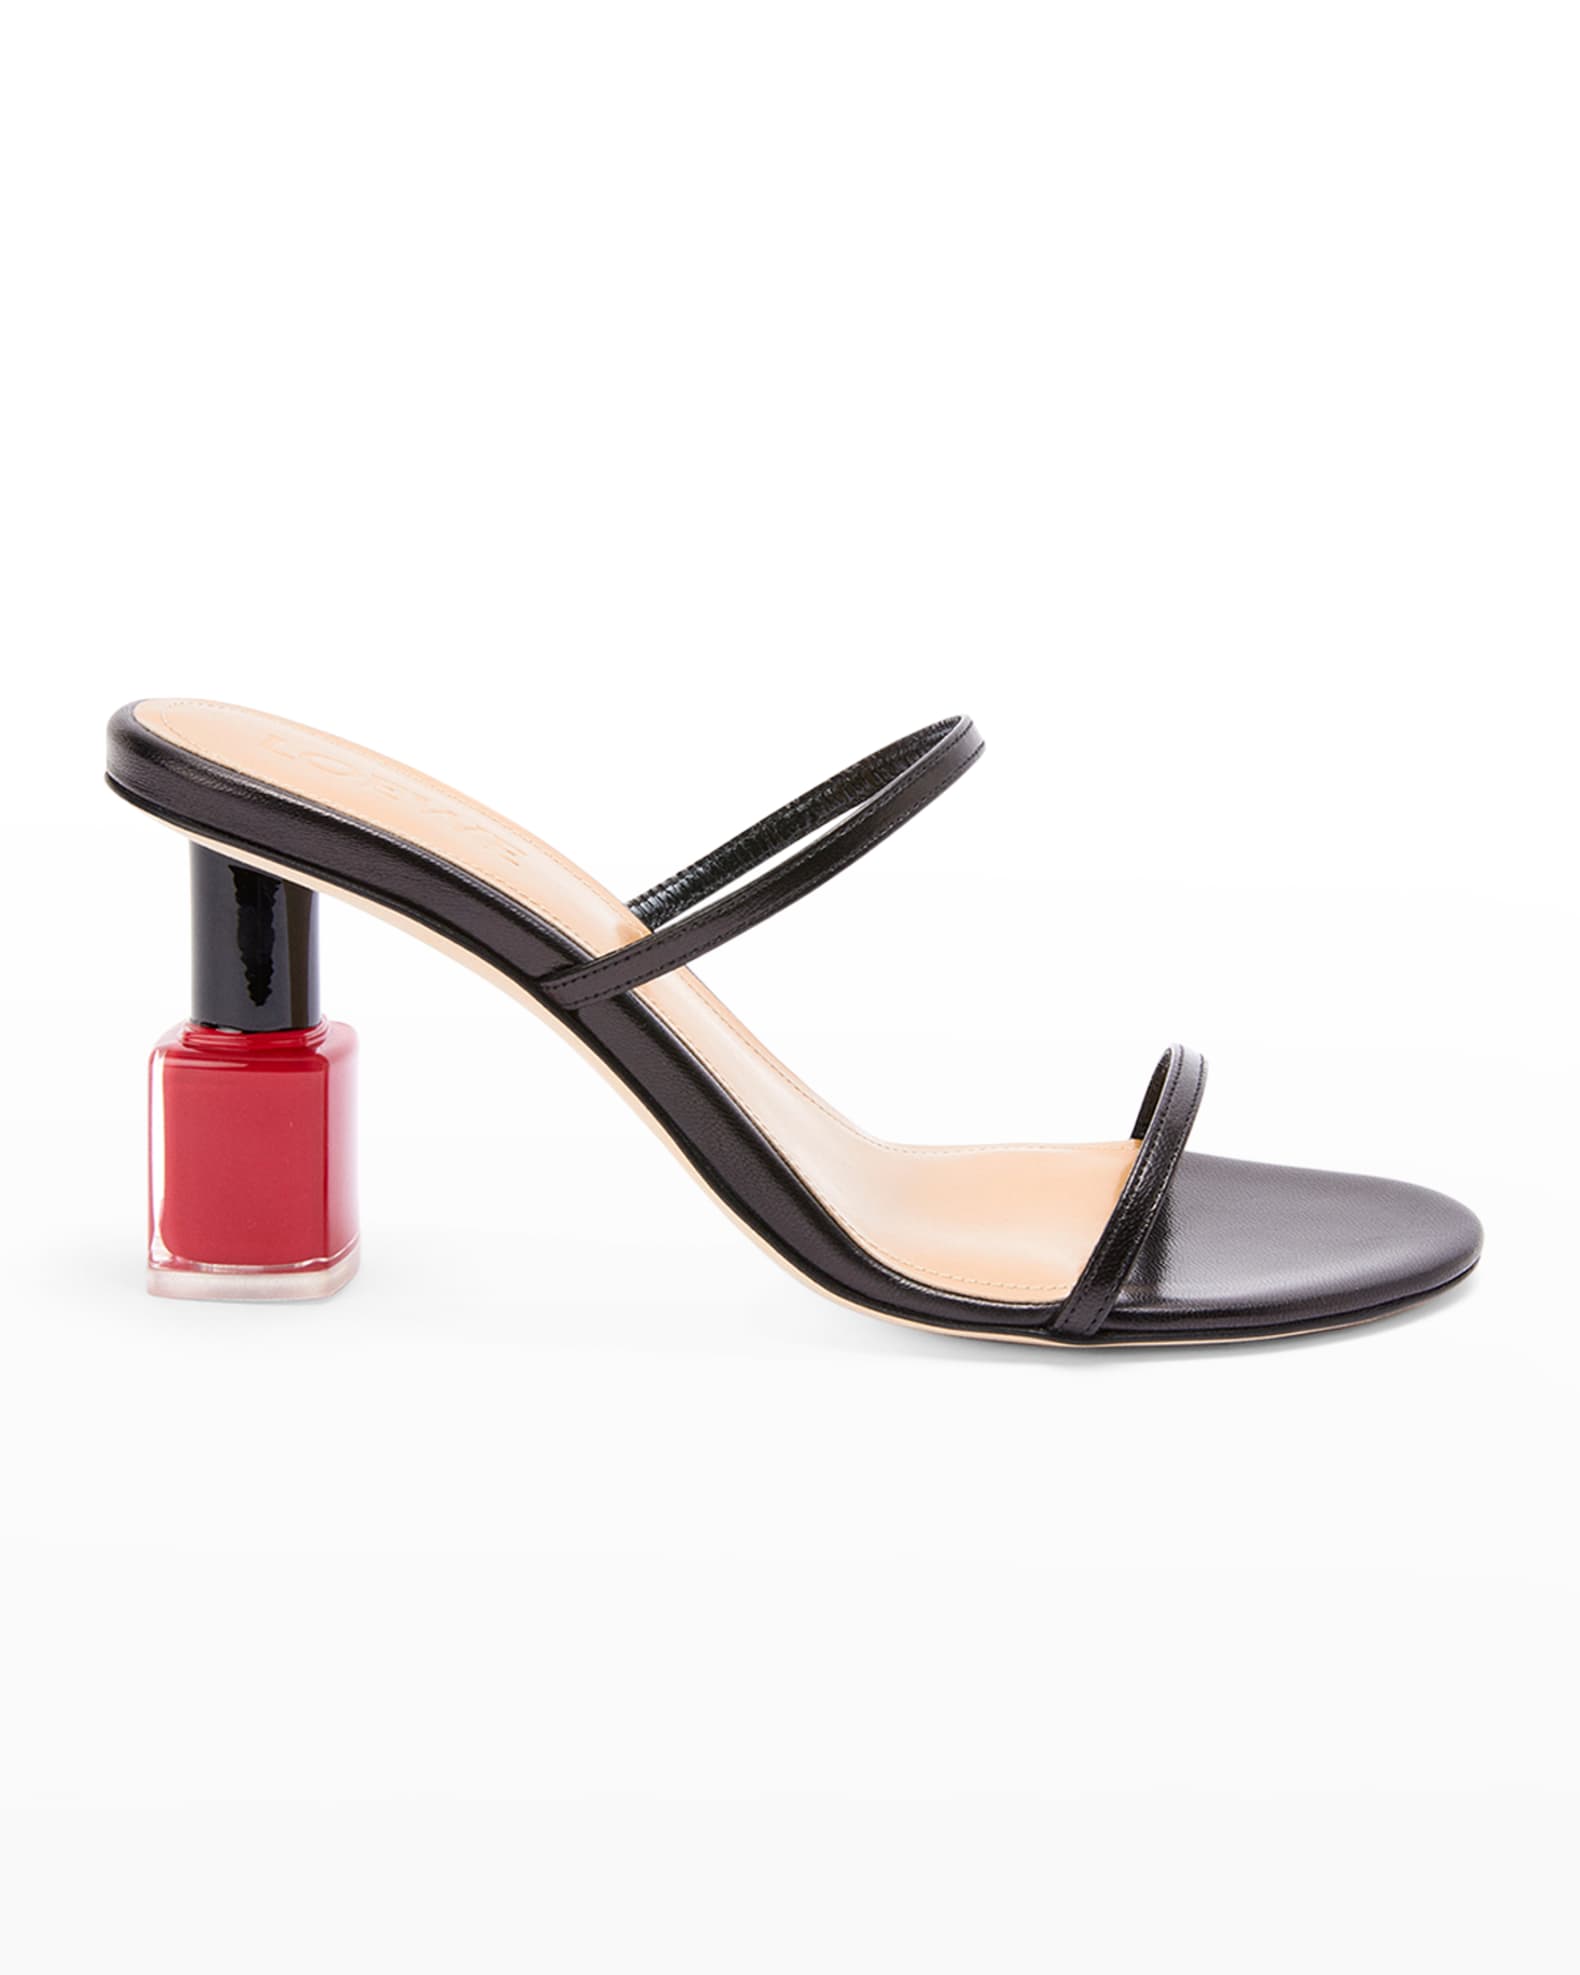 Loewe Nail Polish Two-Band Slide Sandals | Neiman Marcus